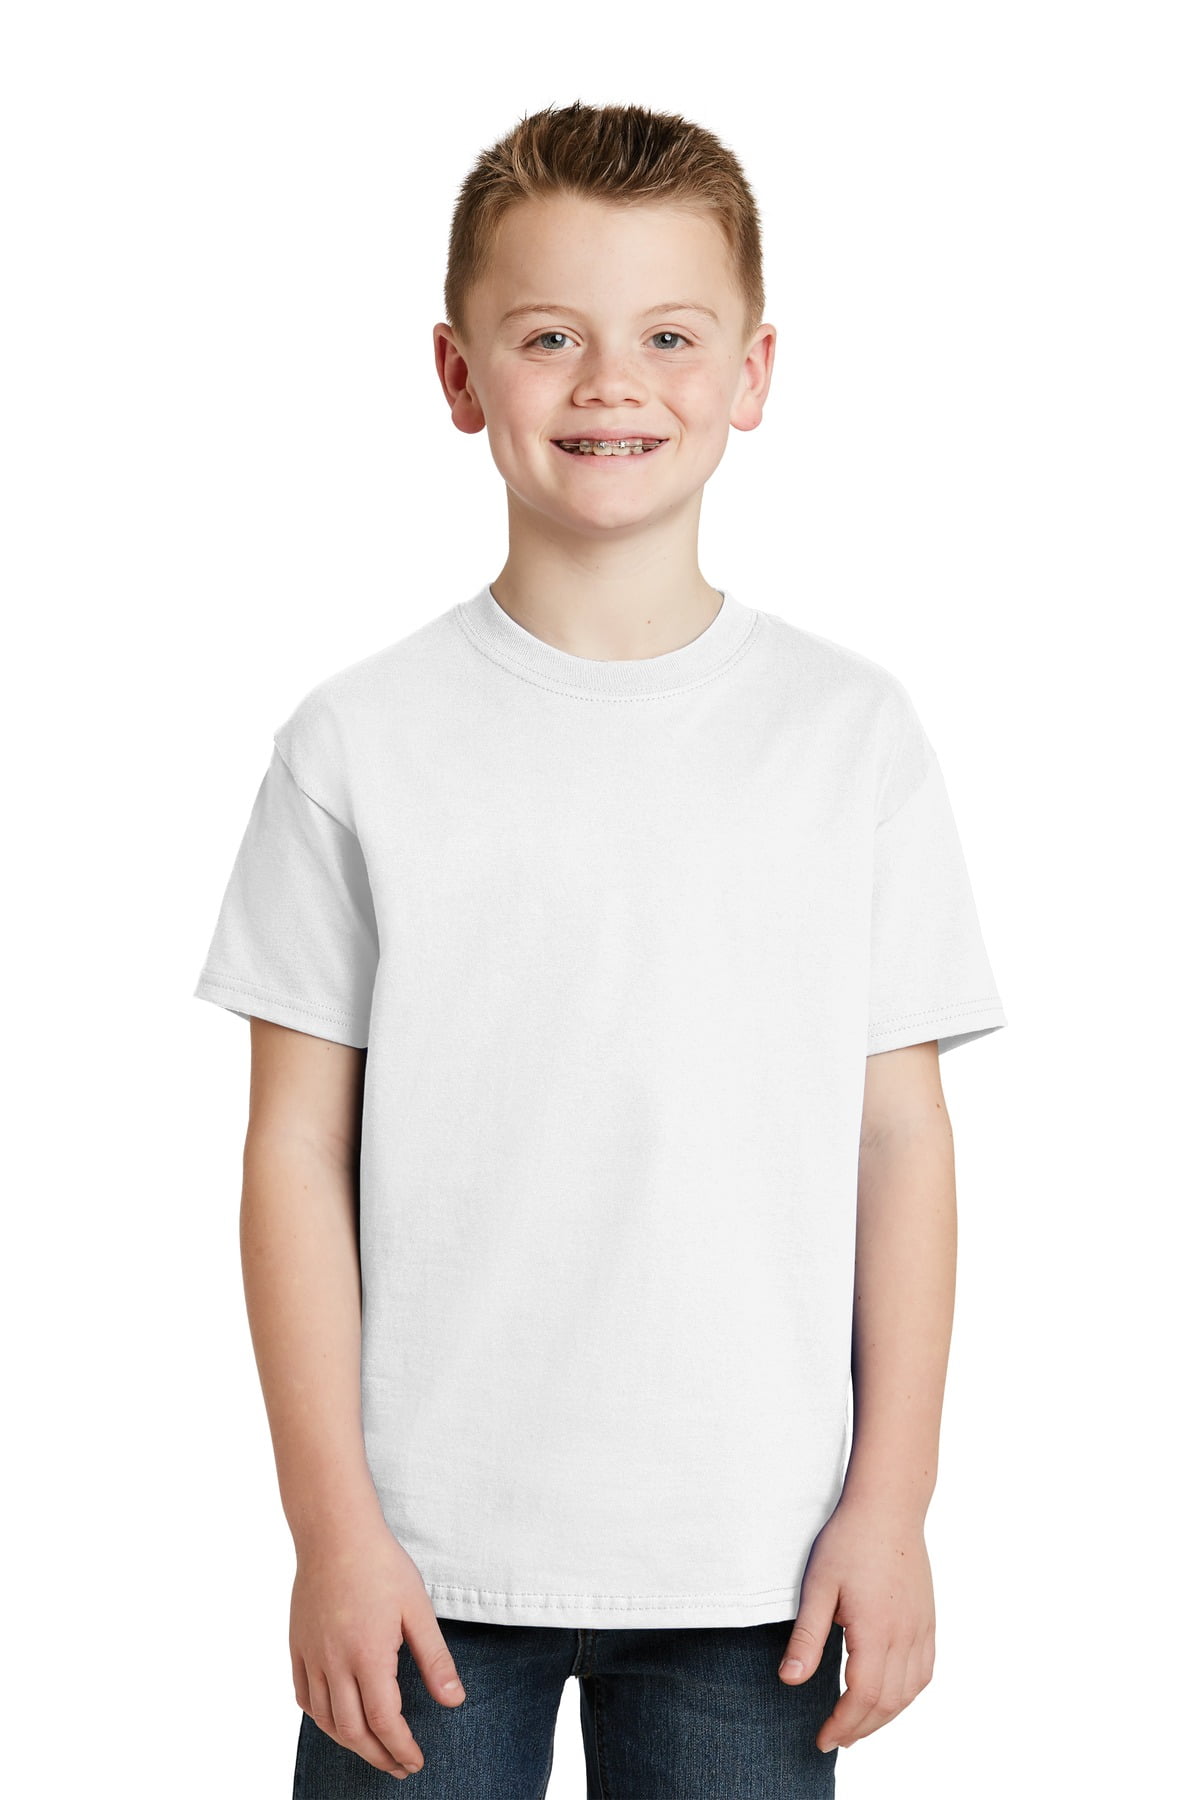 HxG Boys Long Sleeve T-Shirt,Fashion Youth Tops